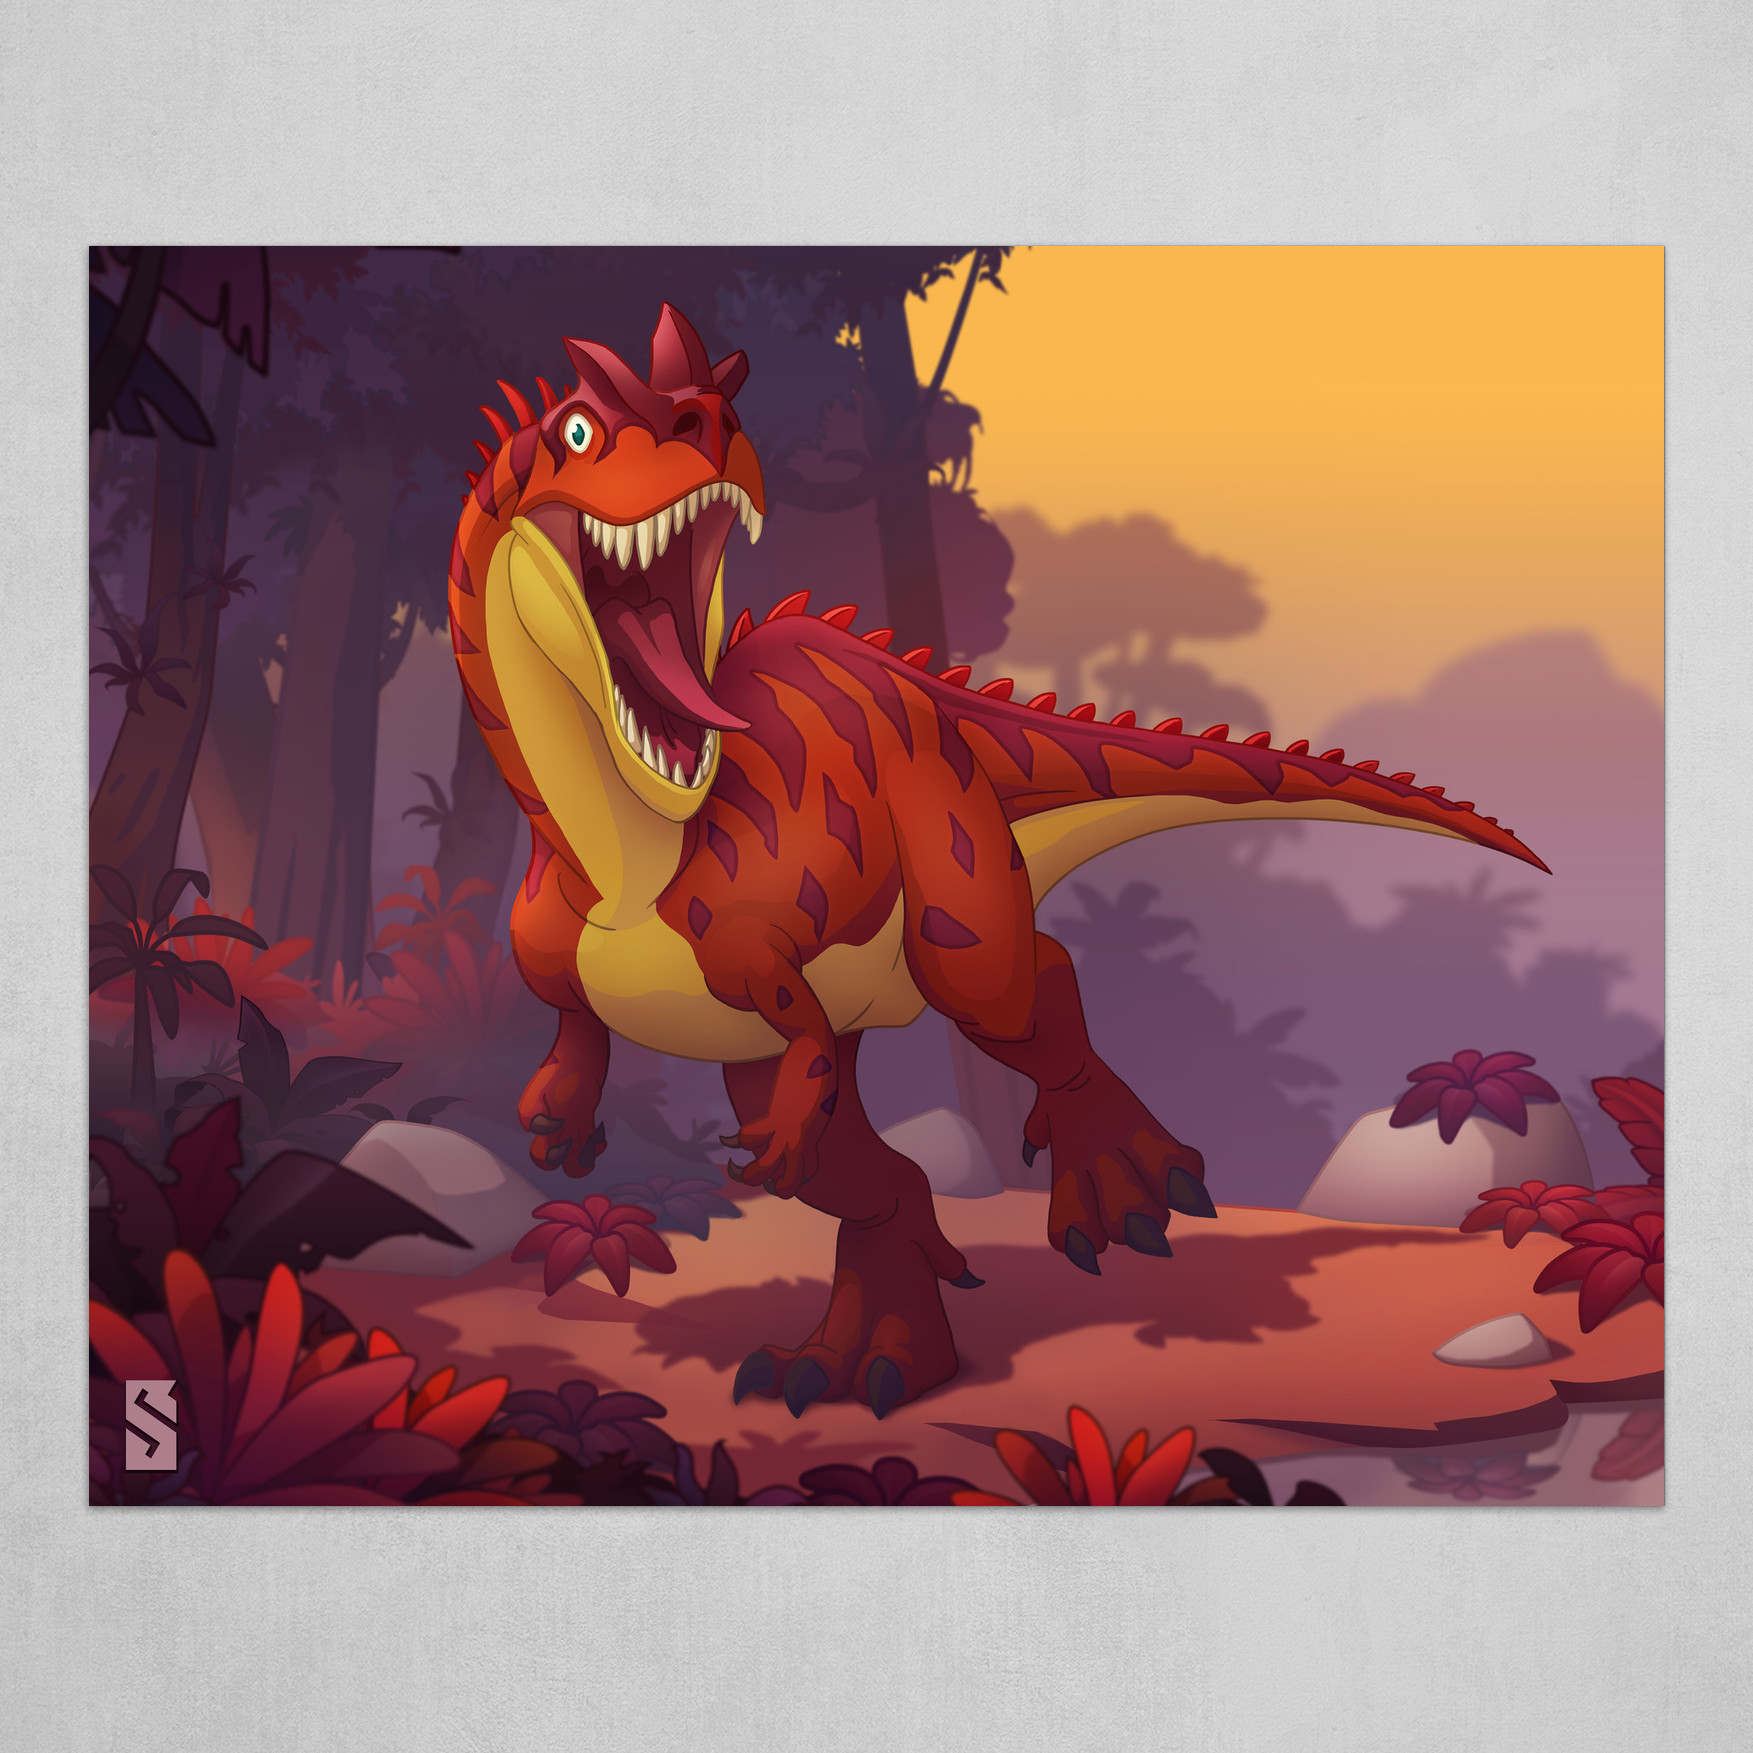 A red cartoon depiction of Ceratosaurus